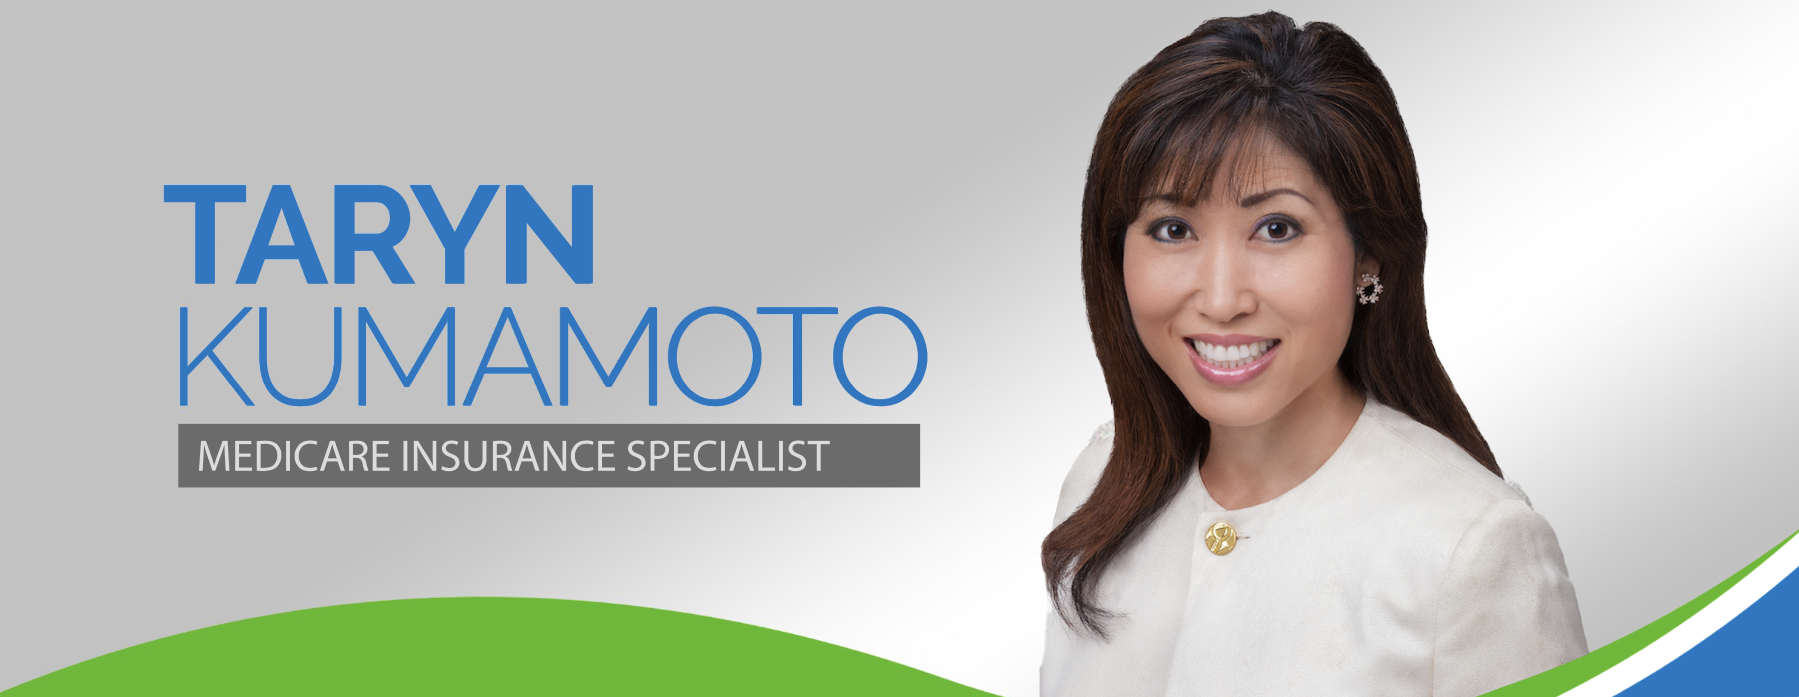 Taryn Kumamoto, medicare insurance specialist